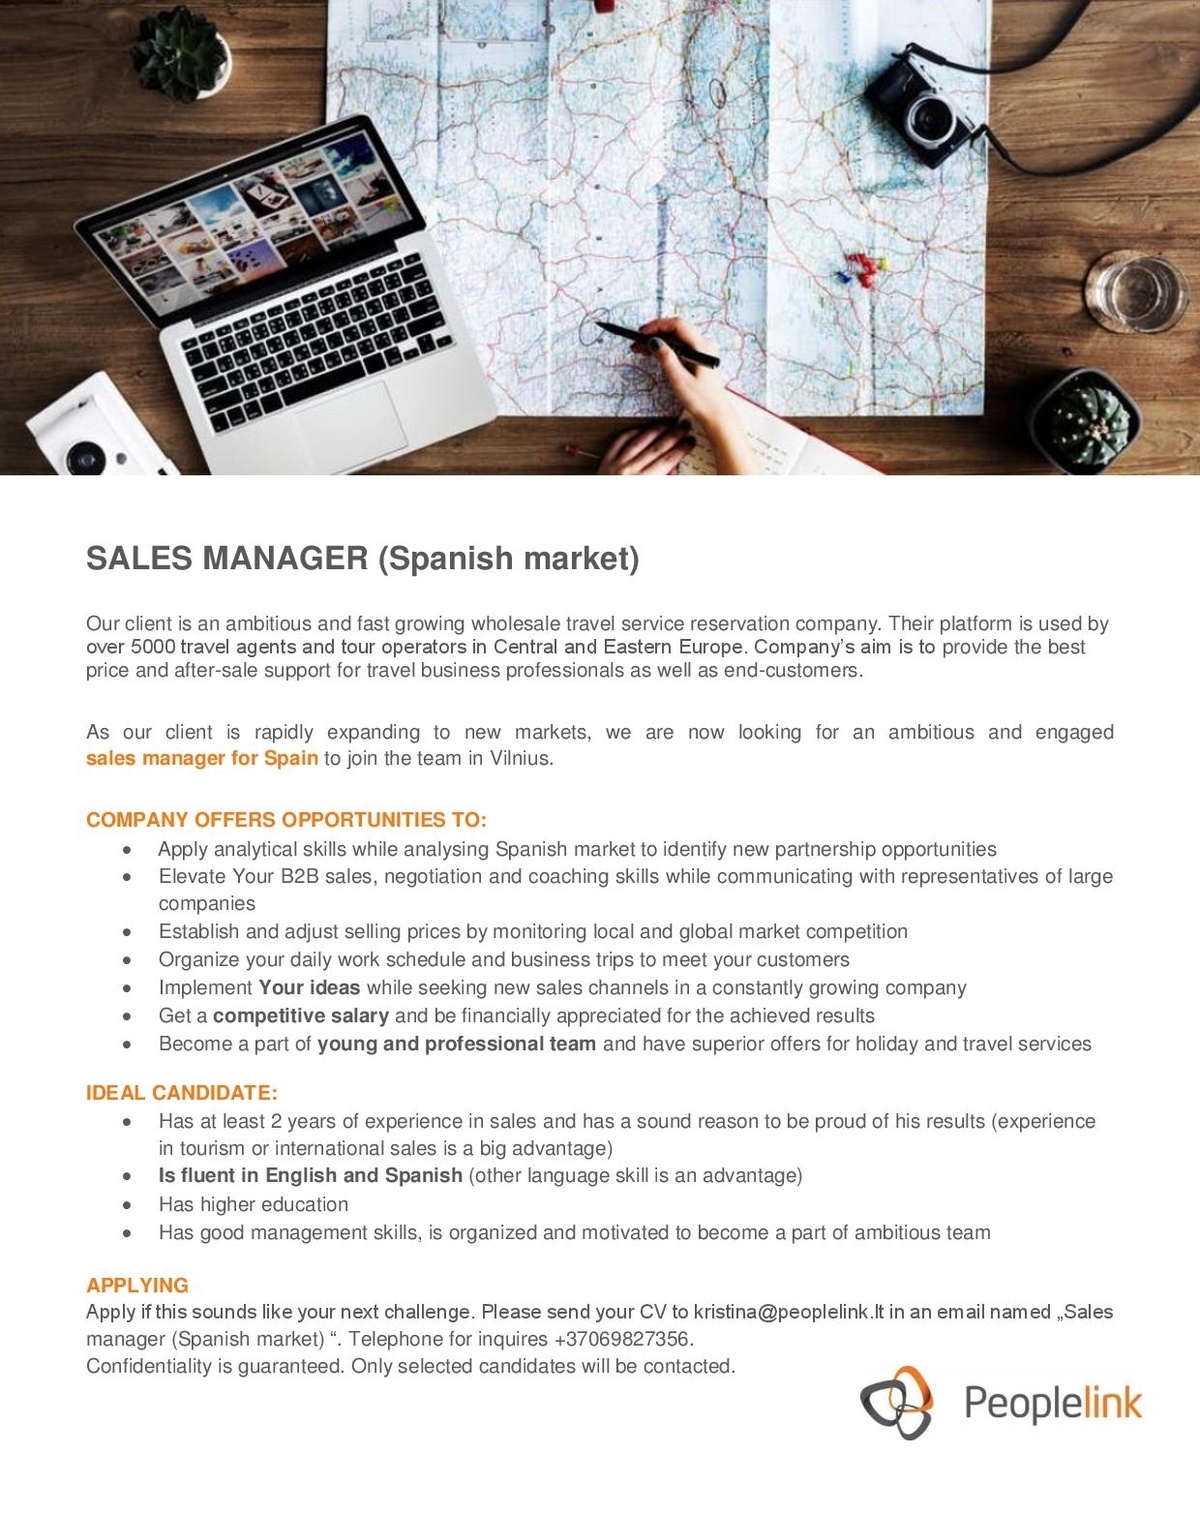 People Link, UAB SALES MANAGER (Spanish market)